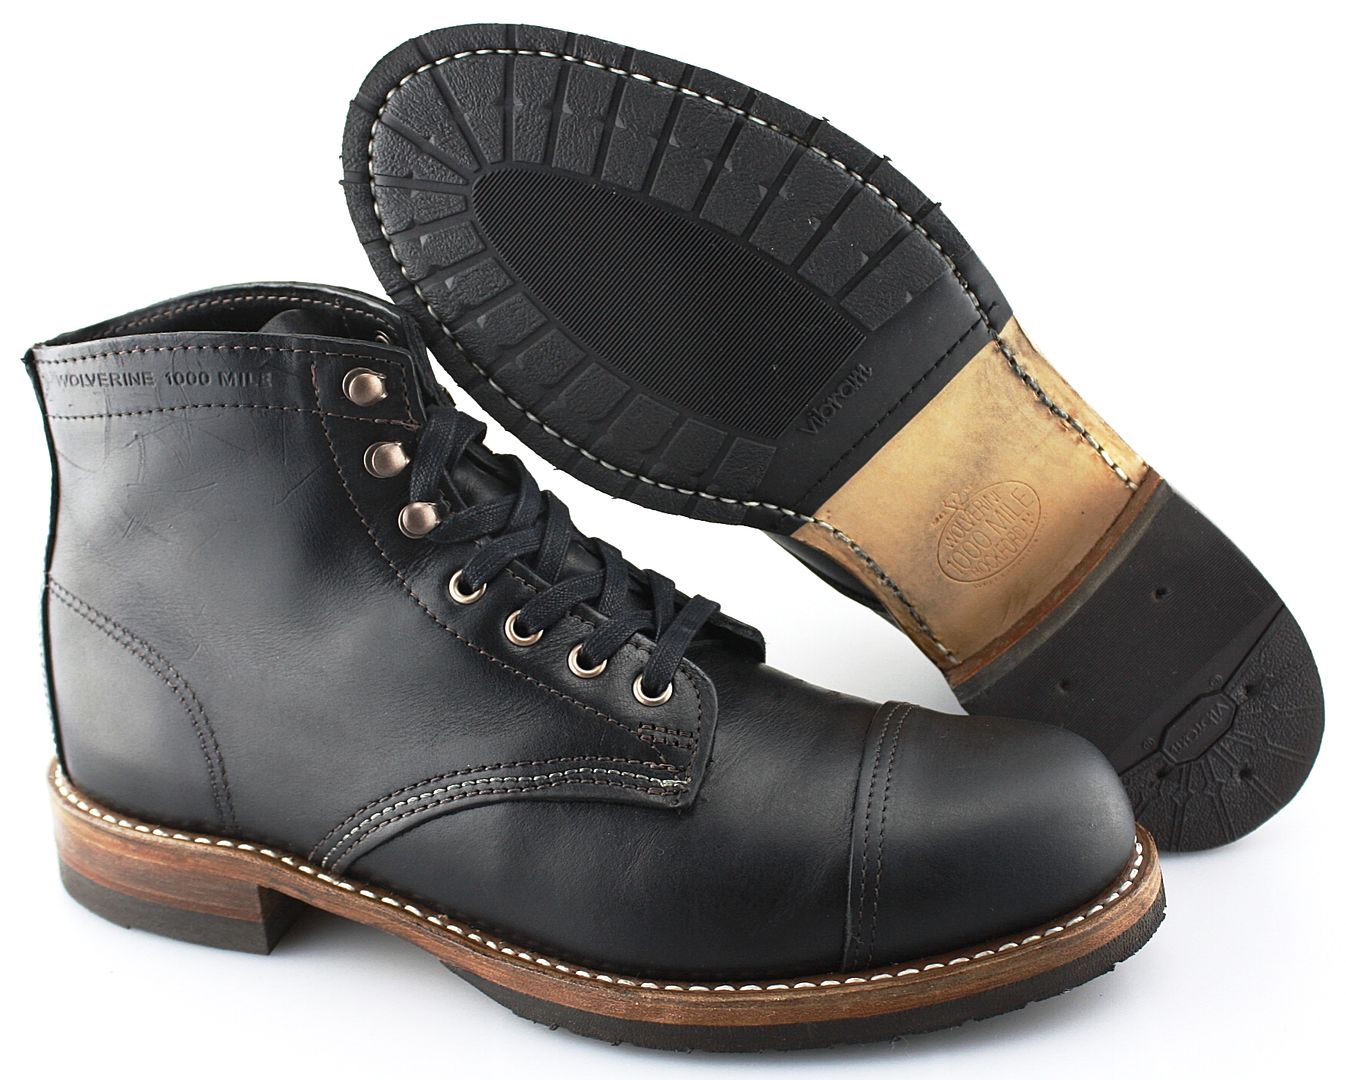 Men's WOLVERINE 'Adrian 1000 Mile' Black Cap Toe Leather Boots Size US ...